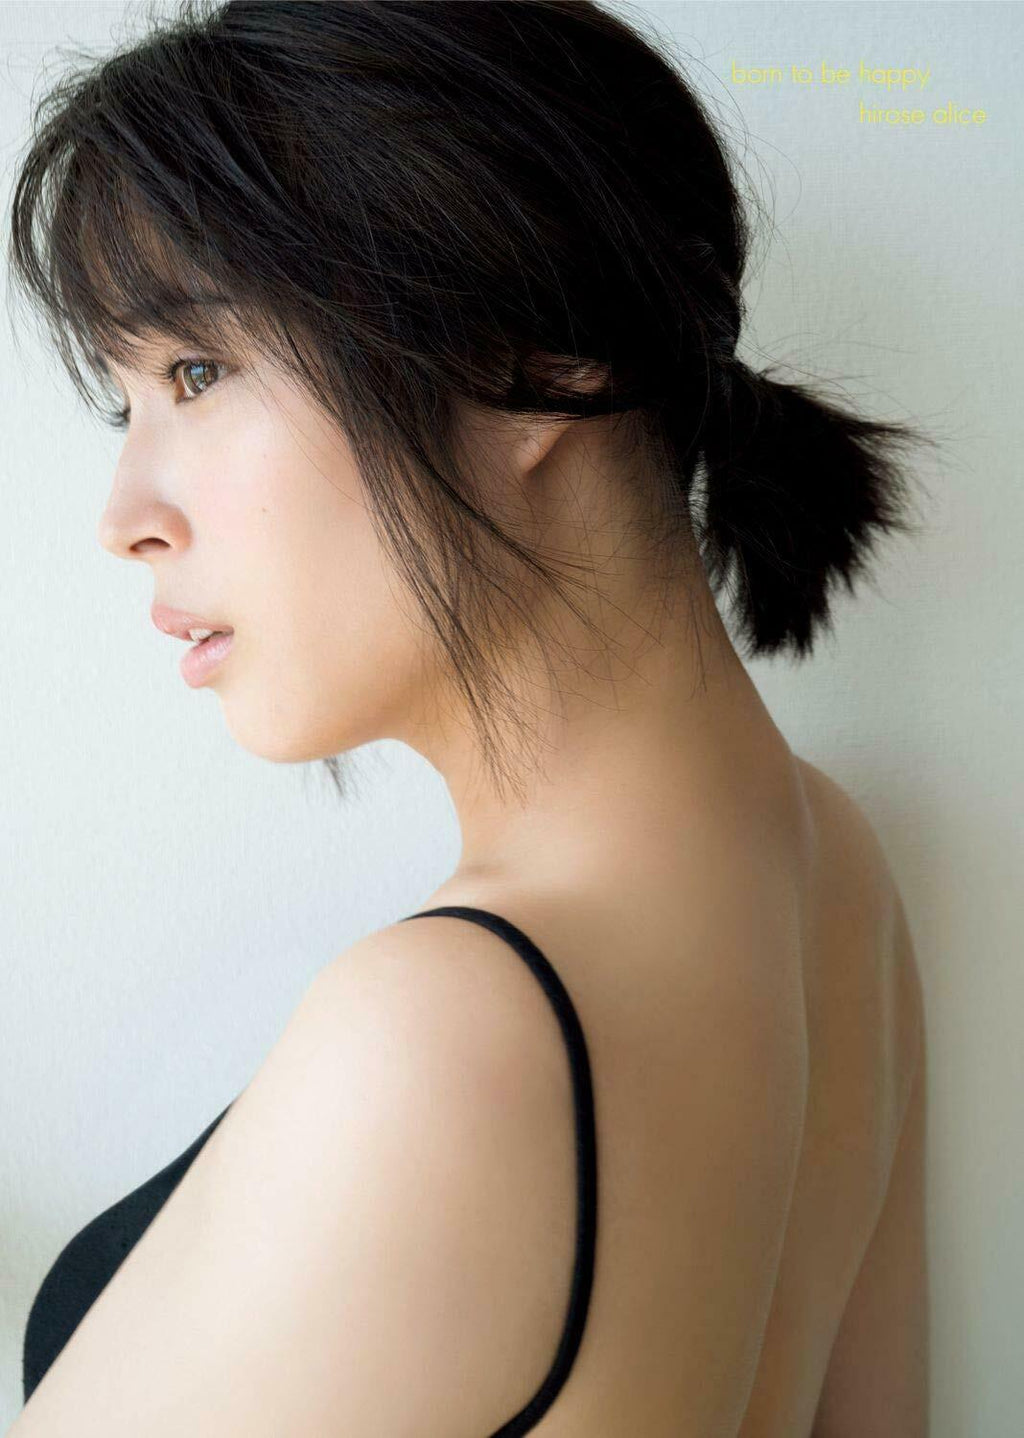 NEW Alice Hirose Photo Book 'born to be happy' | Japanese Actress JAPAN